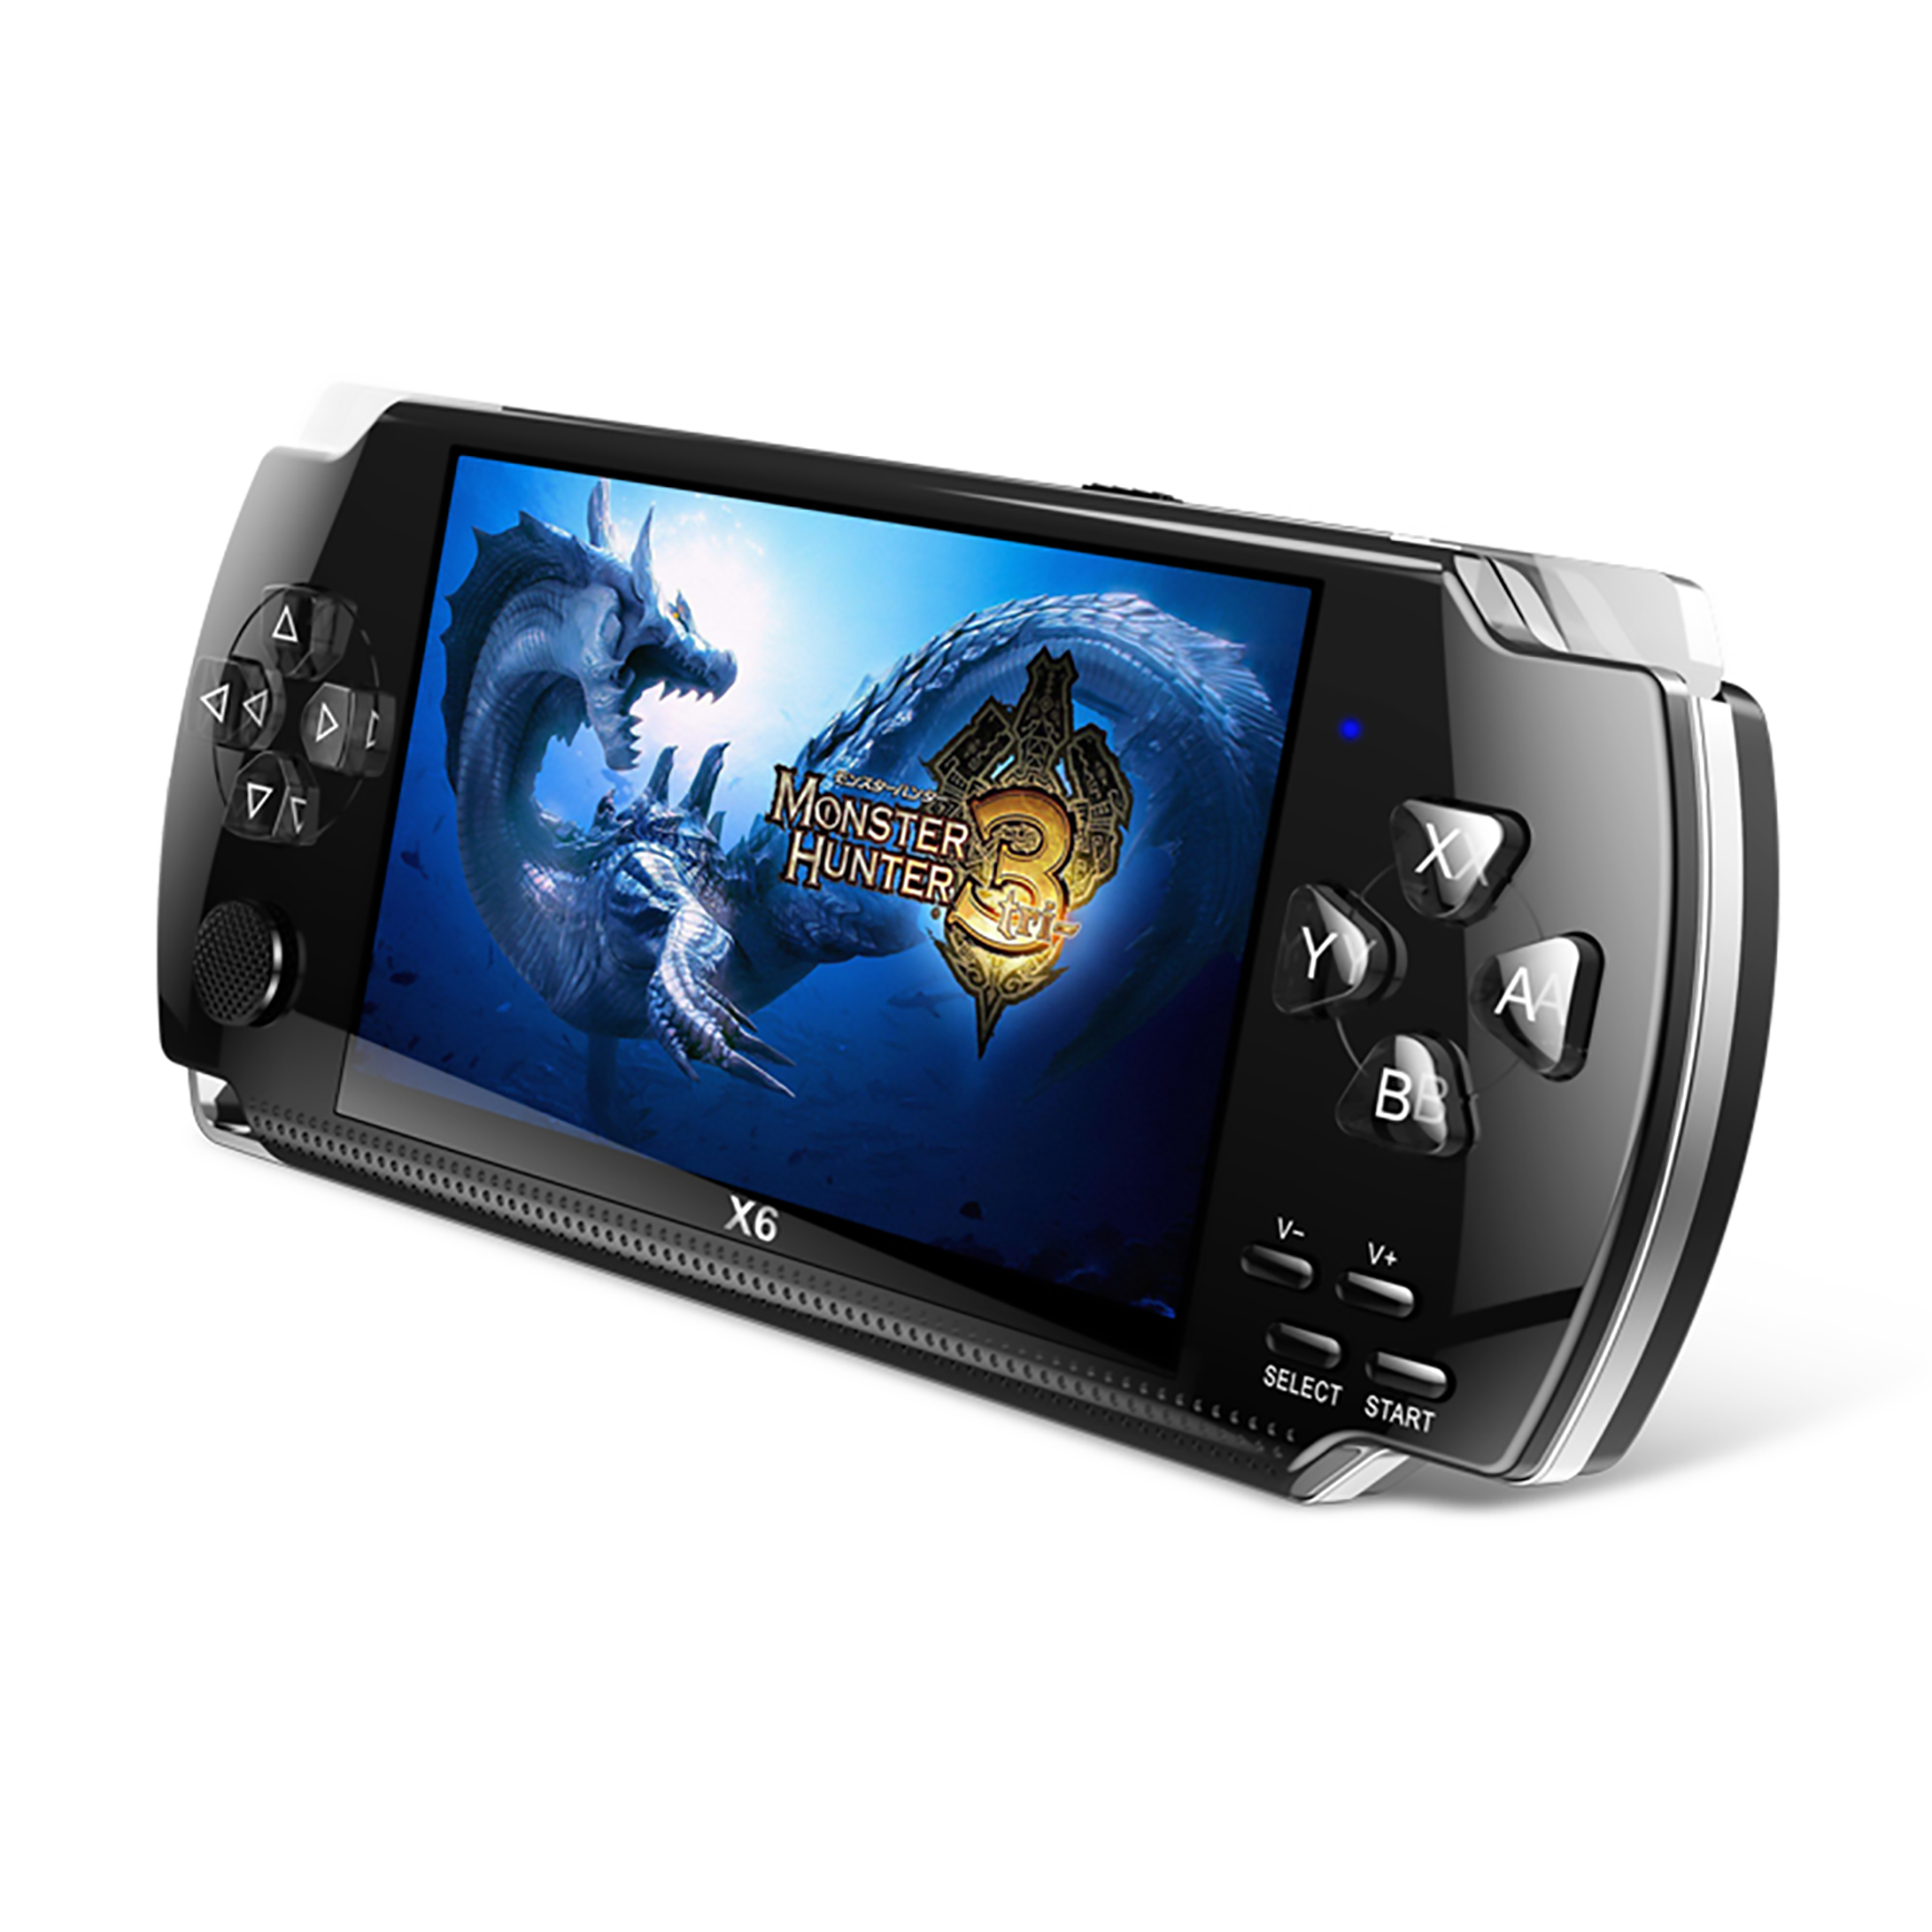 SEEKFUNNING PSP Handheld Game Machine X6 , 8GB , 4" HD Color Screen, Over 3000 Free Games, Black - image 1 of 8